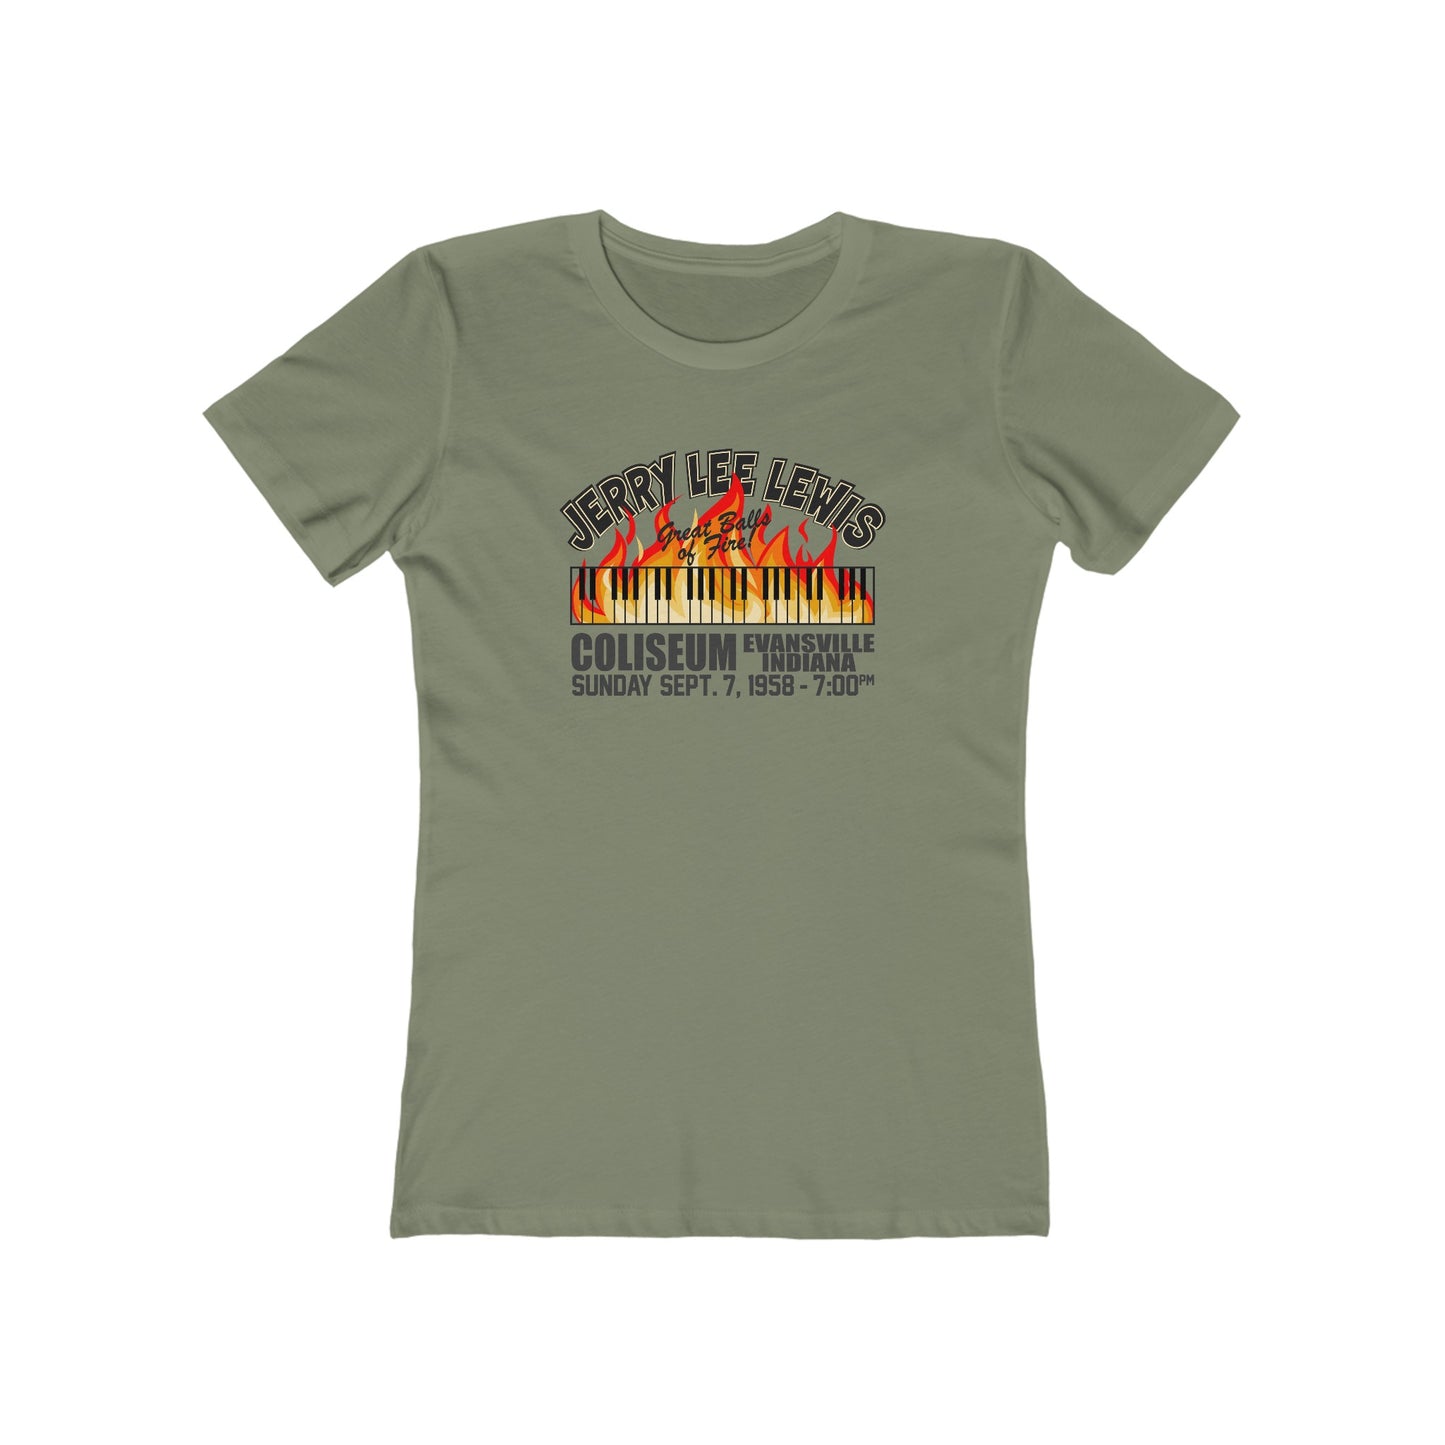 Jerry Lee Lewis - Women's T-Shirt